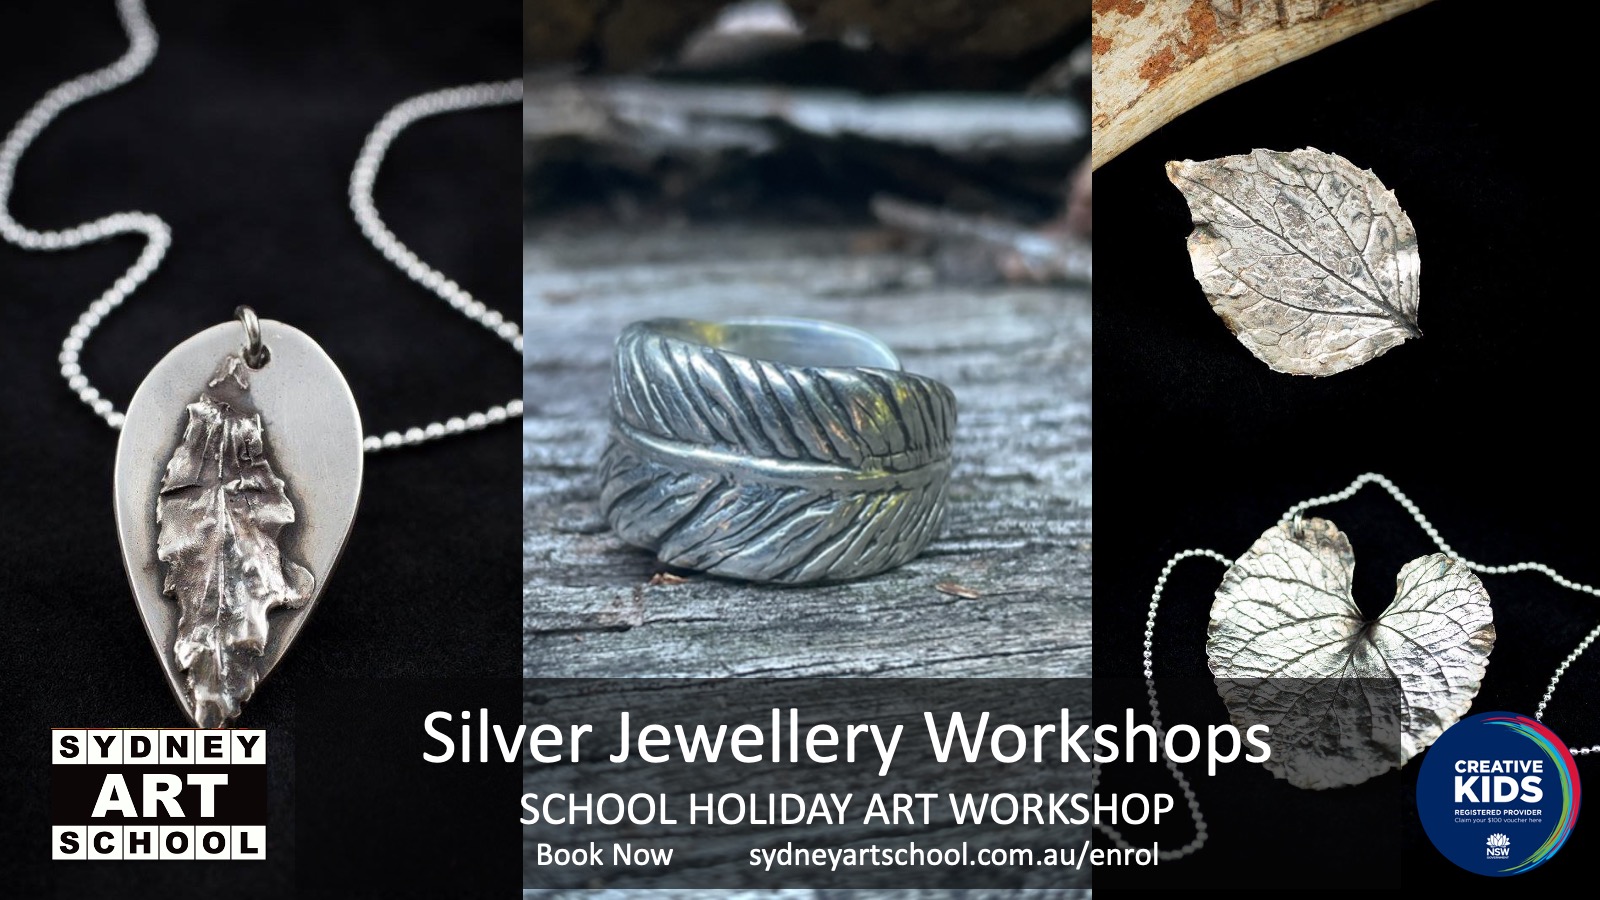 Sydney Art School Holiday Art Workshop Silver Jewellery